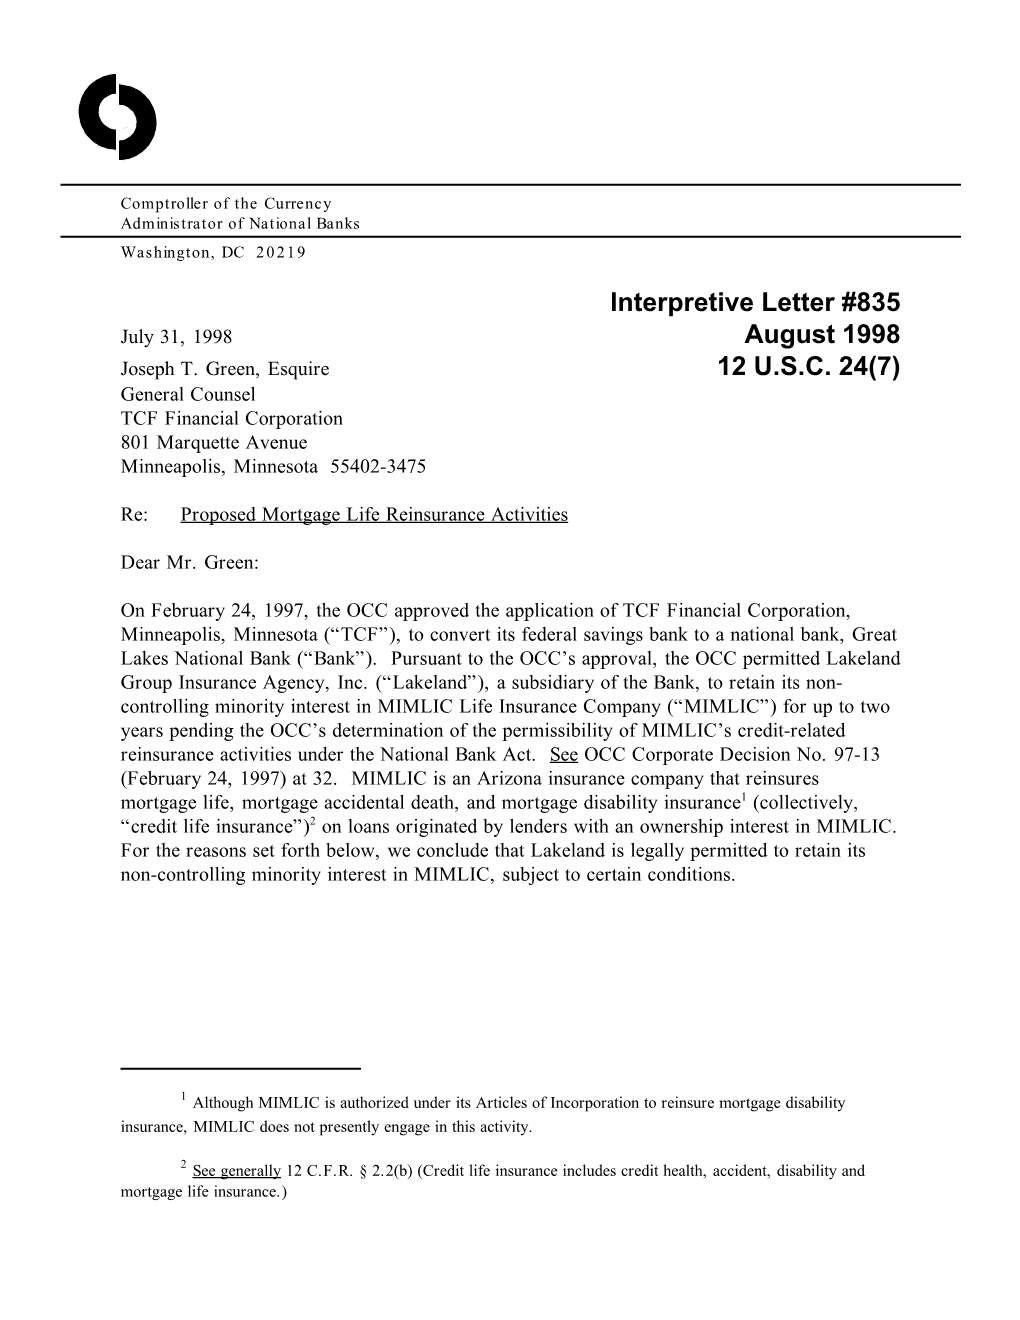 Interpretive Letter #835 August 1998 12 U.S.C. 24(7)